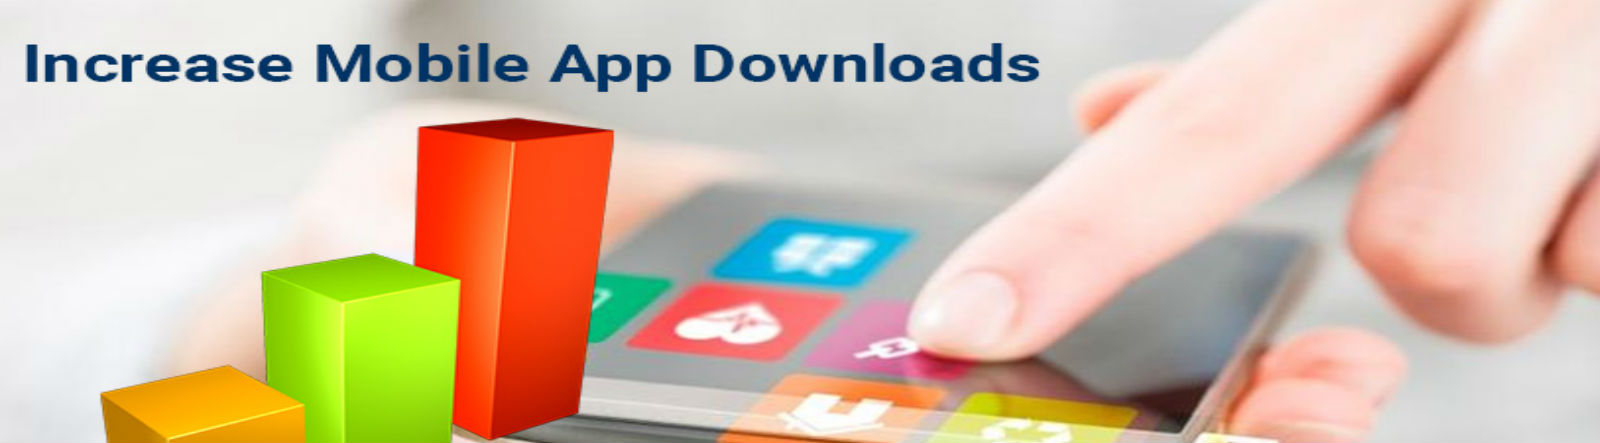 Increase mobile app downloads